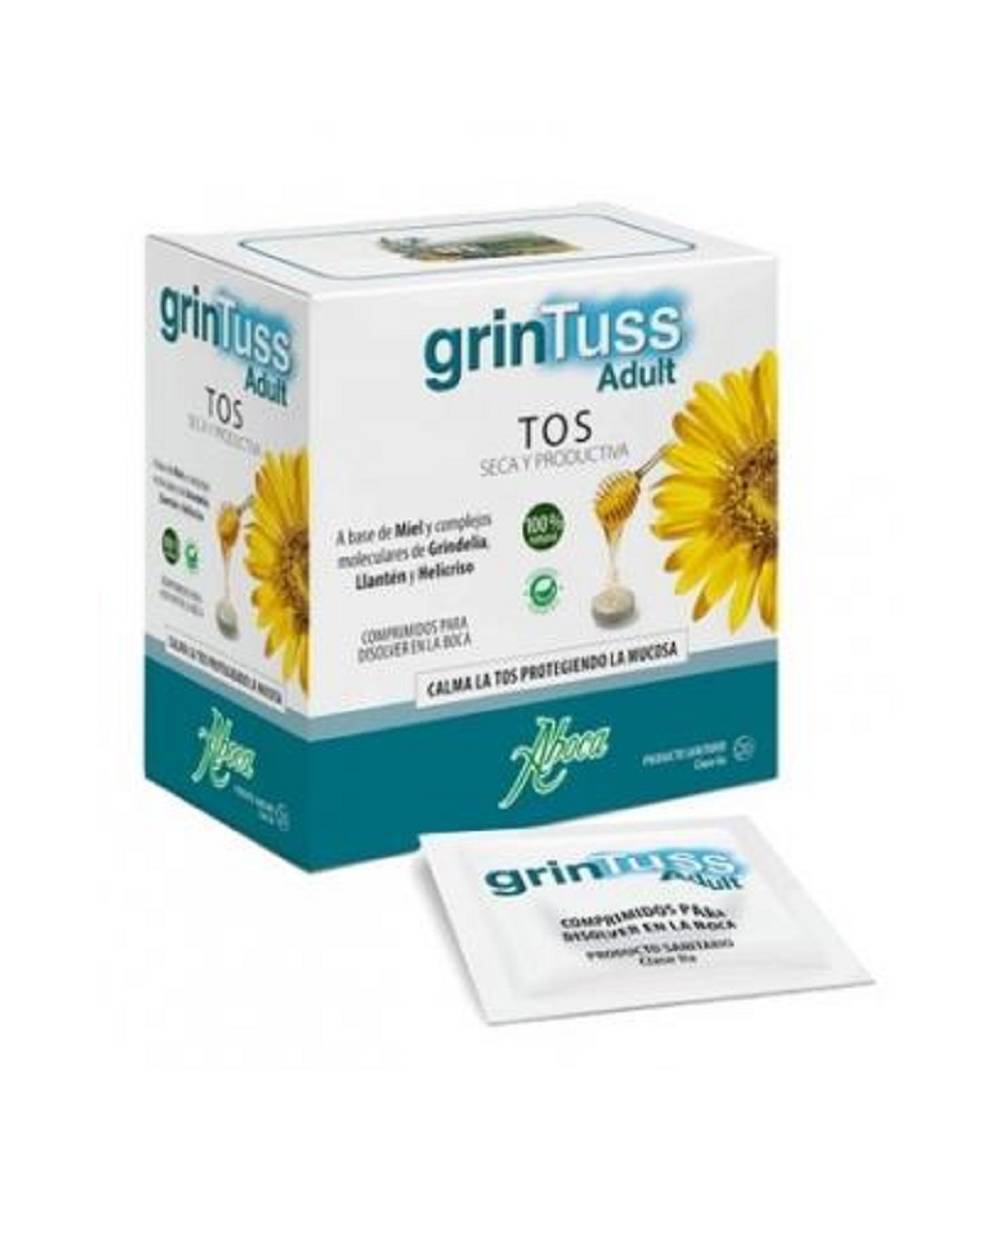 Grintuss Adultos 20 comprimidos para chupar